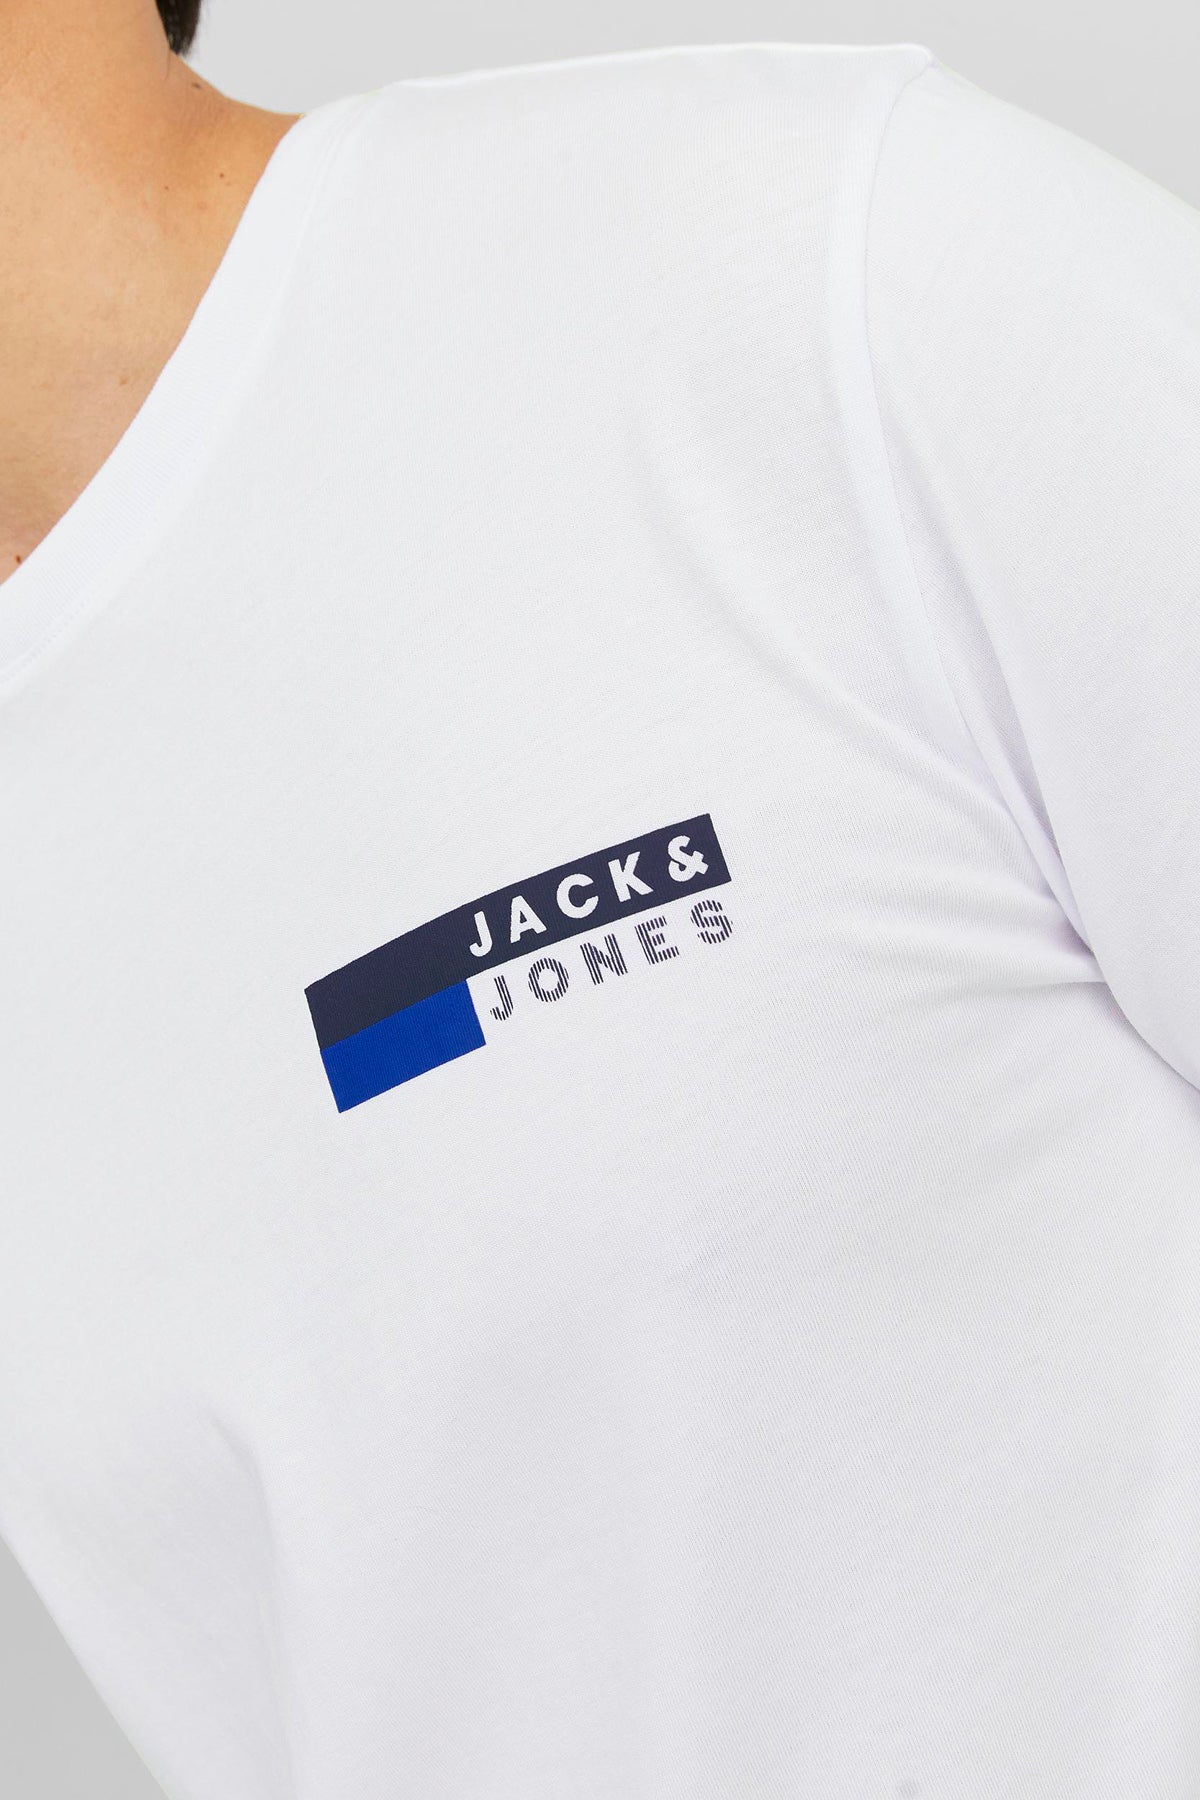 Jack & Jones Essentials Pamuklu Slim Fit Bisiklet Yaka Erkek T Shirt 12233999 BEYAZ-MAVİ